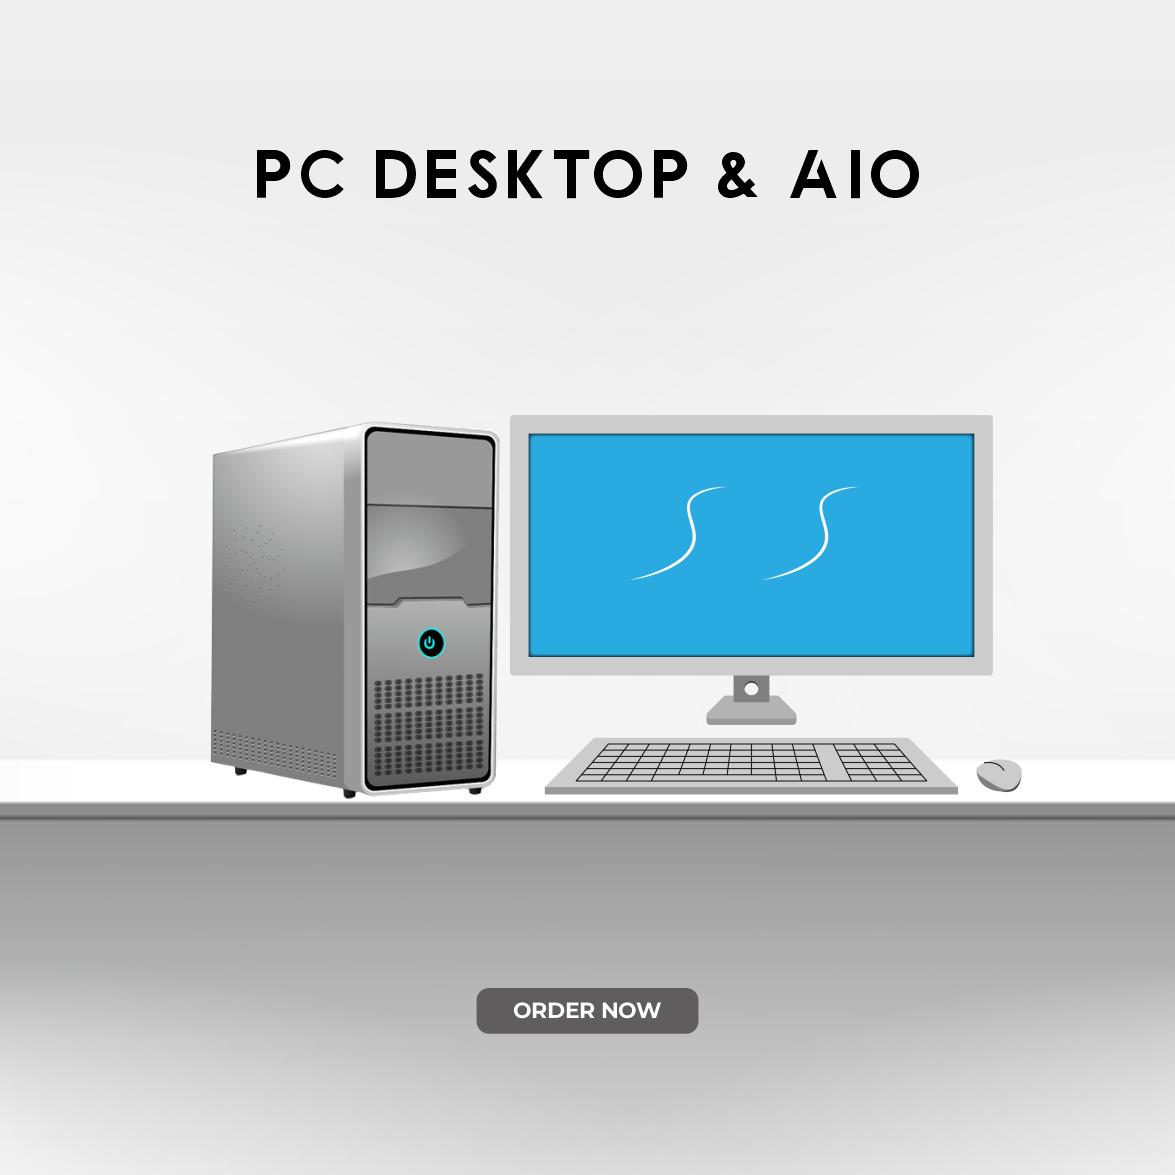 PC Desktop & AIO